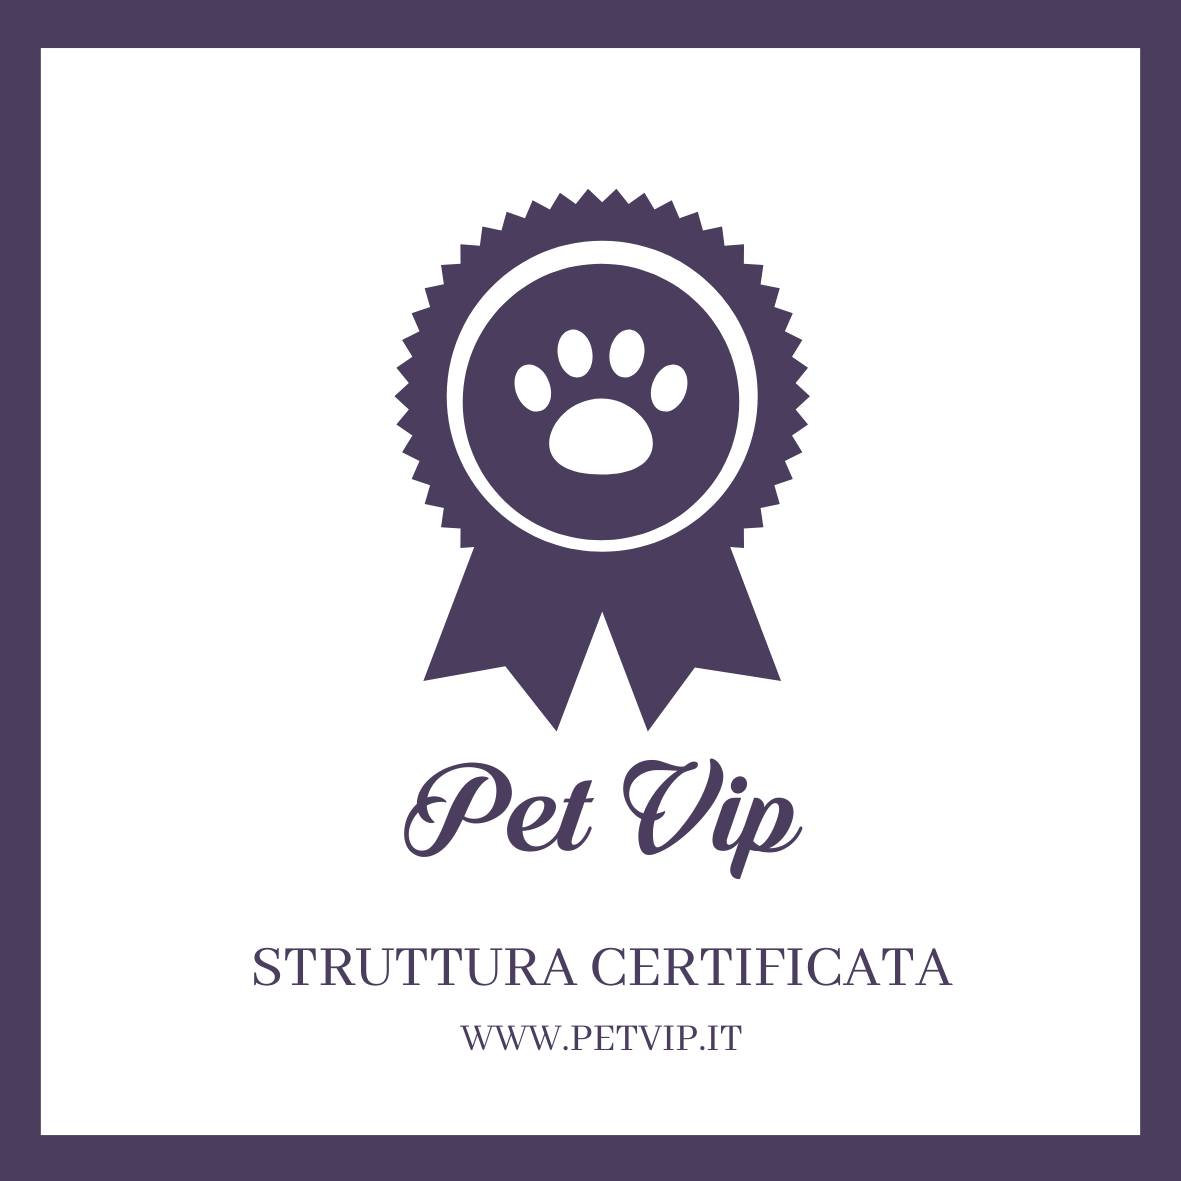 Struttura certificata Pet Vip